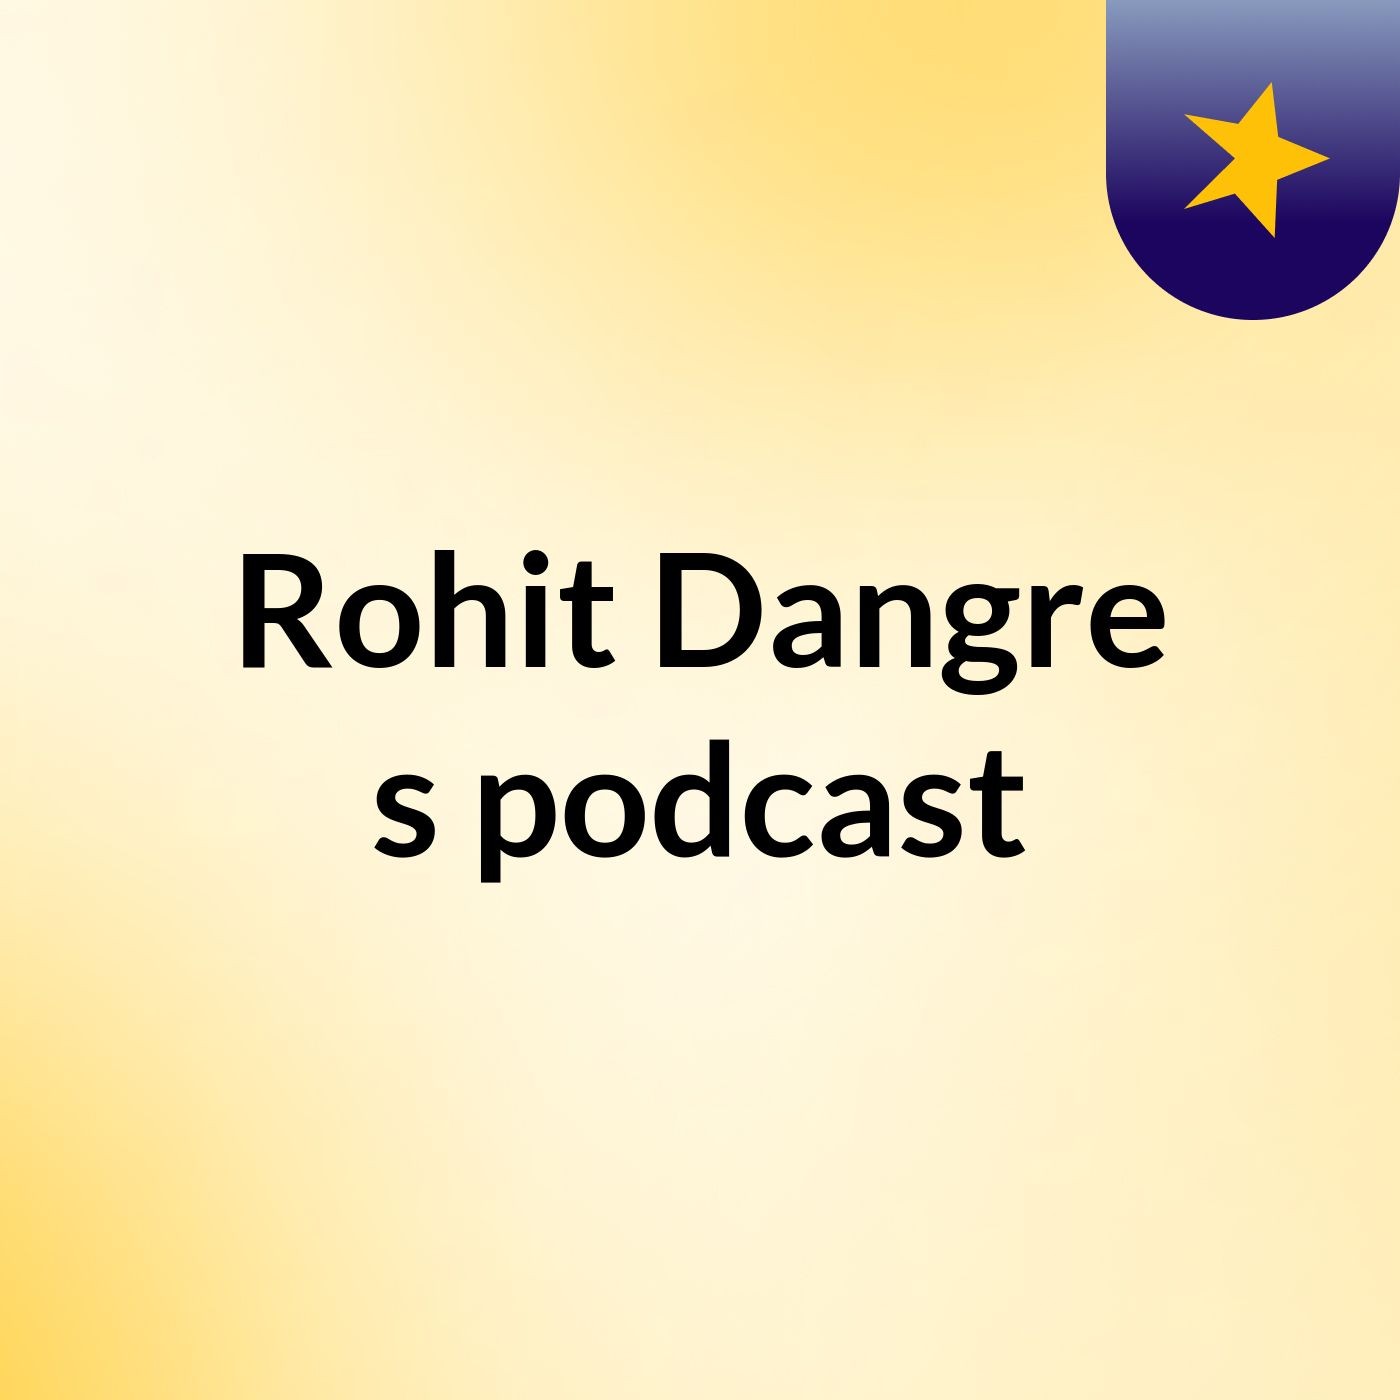 Rohit Dangre's podcast